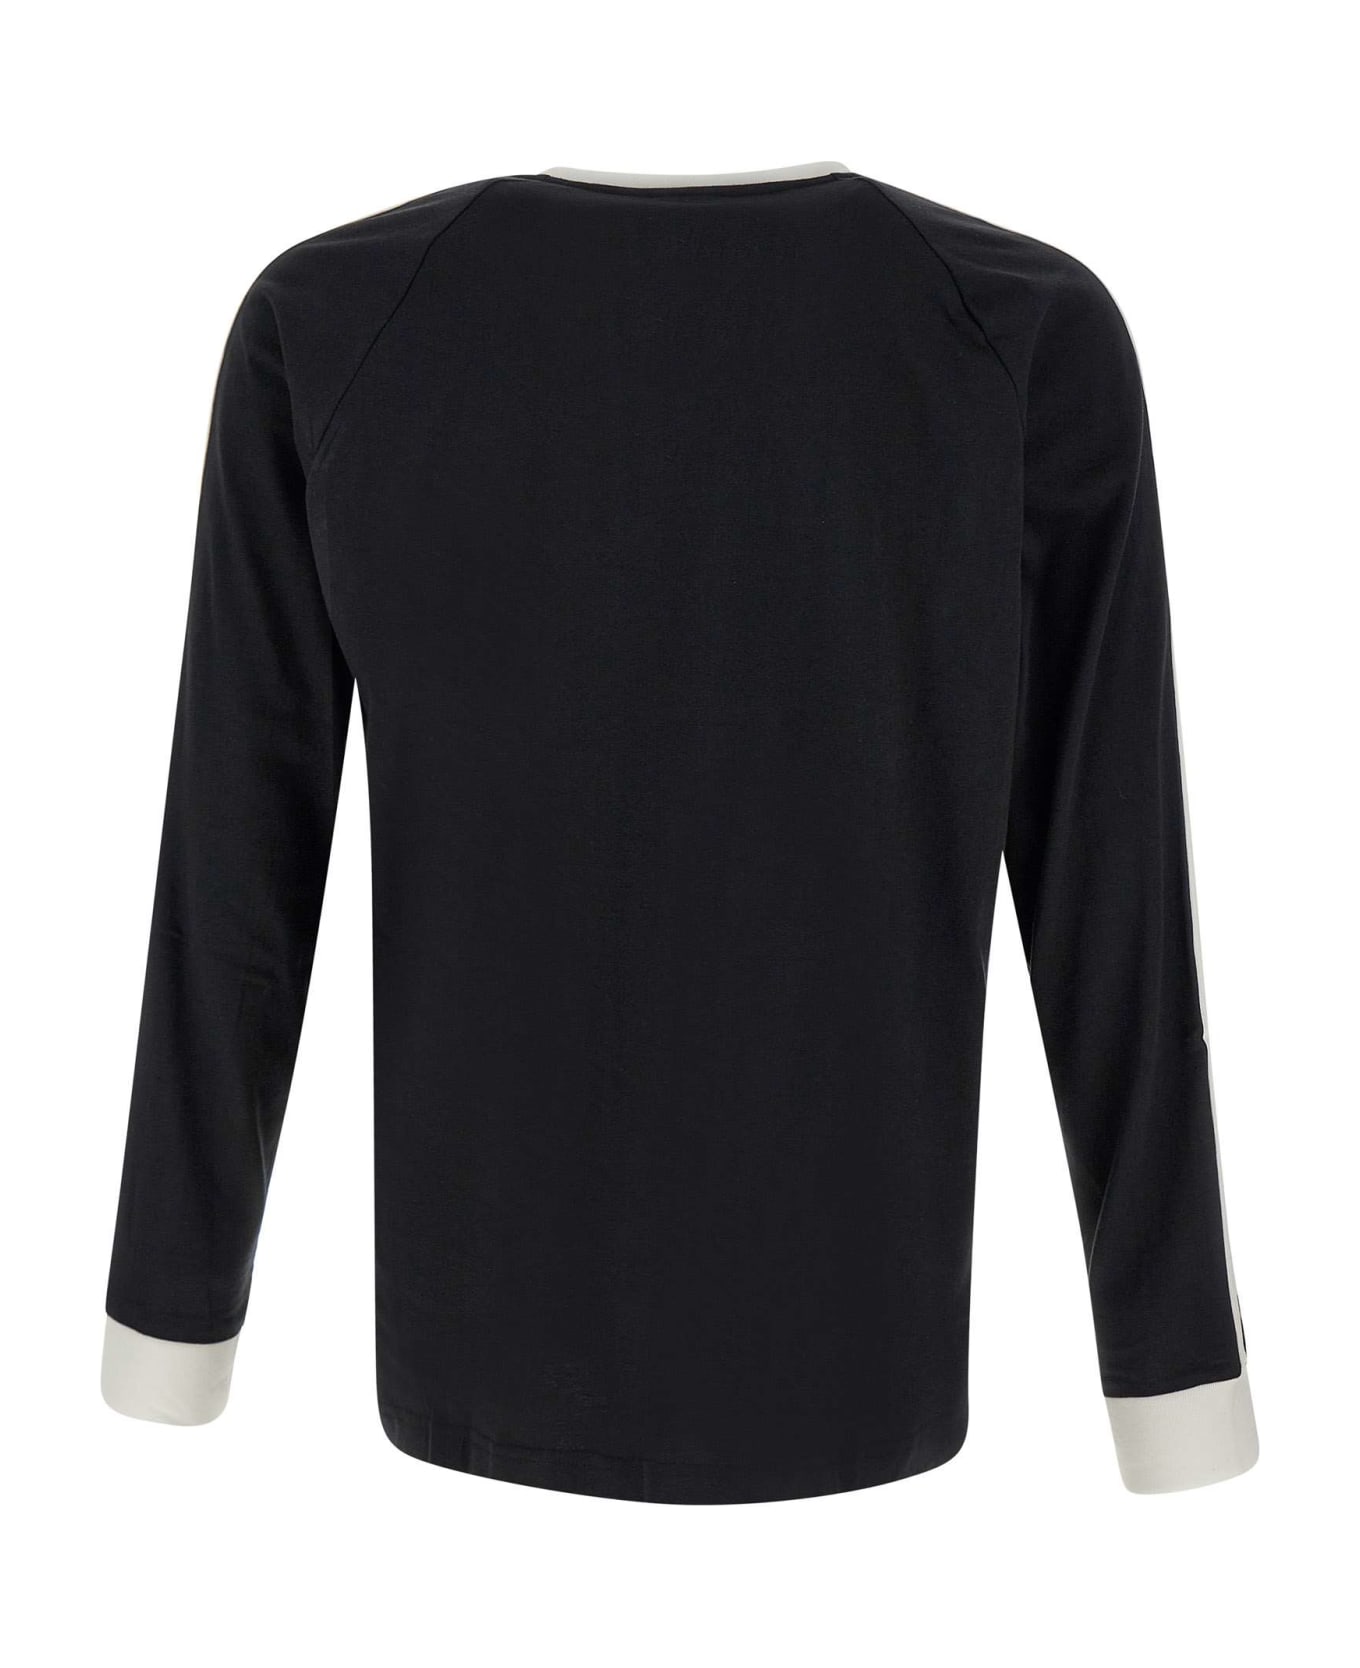 Adidas "flames" Cotton Sweater - BLACK ニットウェア